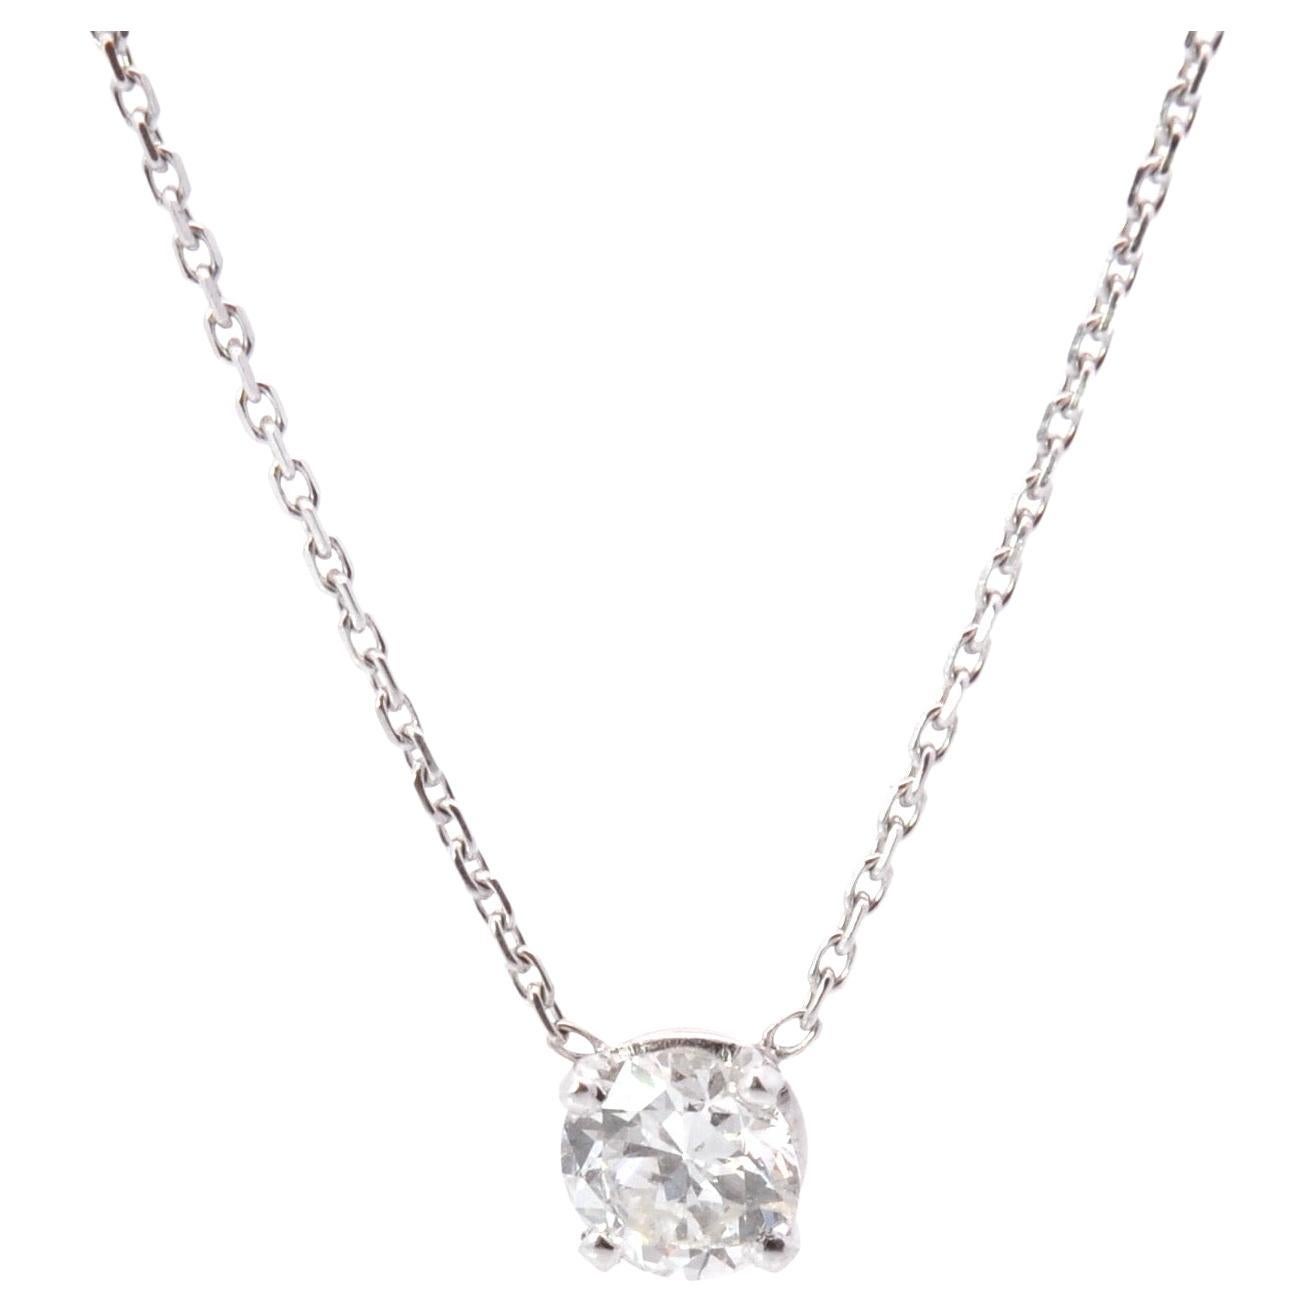 Diamond pendant necklace in 18k white gold